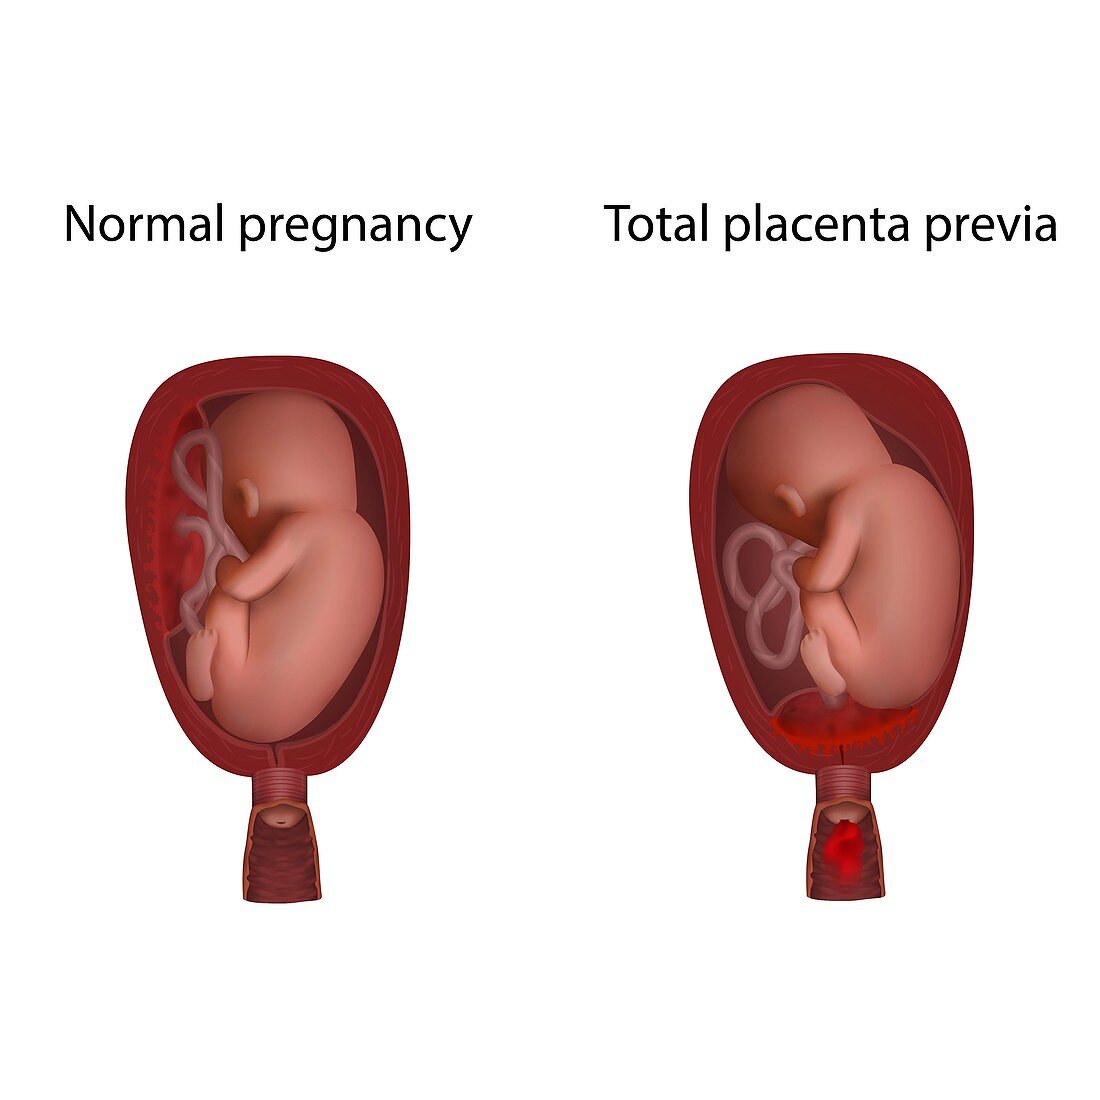 Total placenta previa and normal pregnancy, illustration